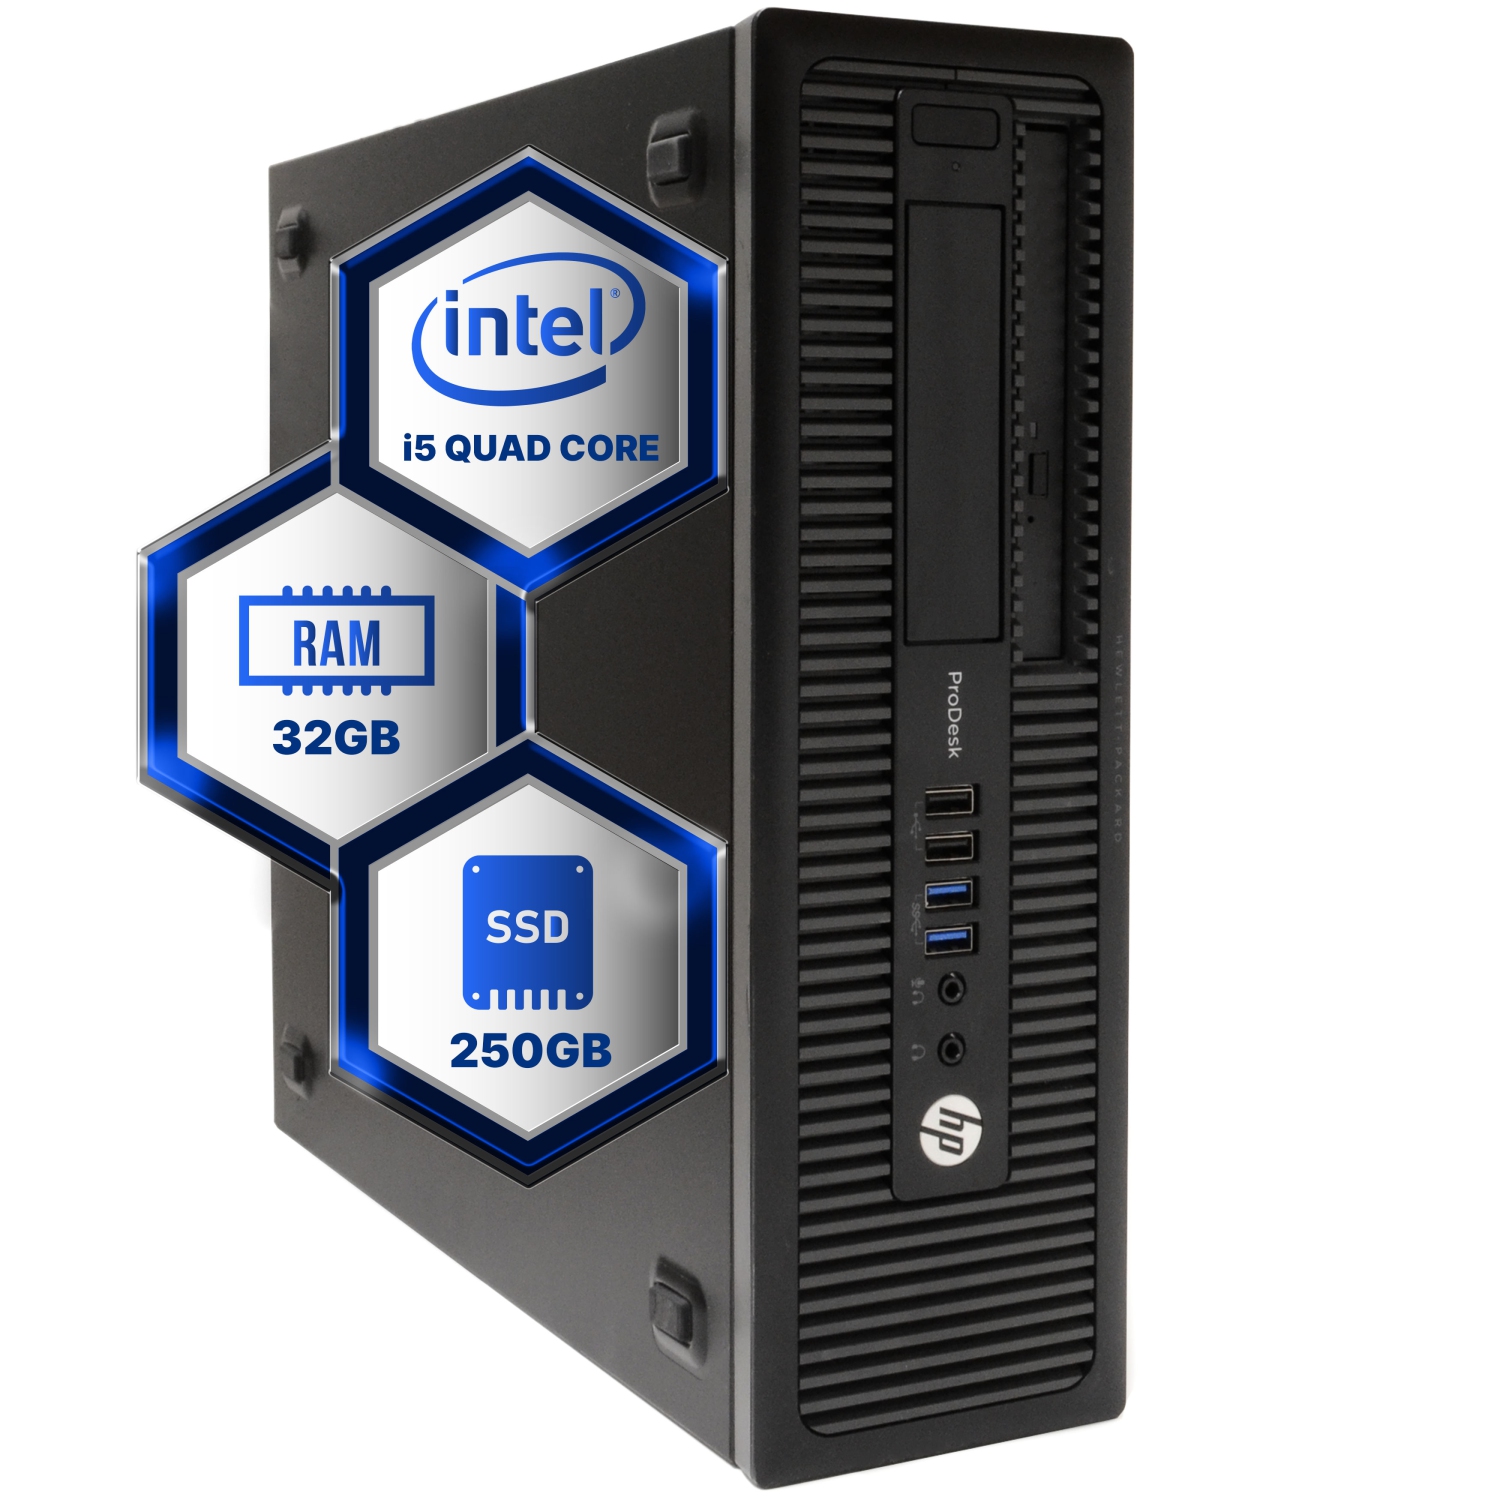 Refurbished (Good) HP ProDesk 4th Gen Desktop Computer | Quad Core Intel i5 (3.2) | 32GB DDR3 RAM | 250GB SSD | Windows 10 Professional | Home or Office PC